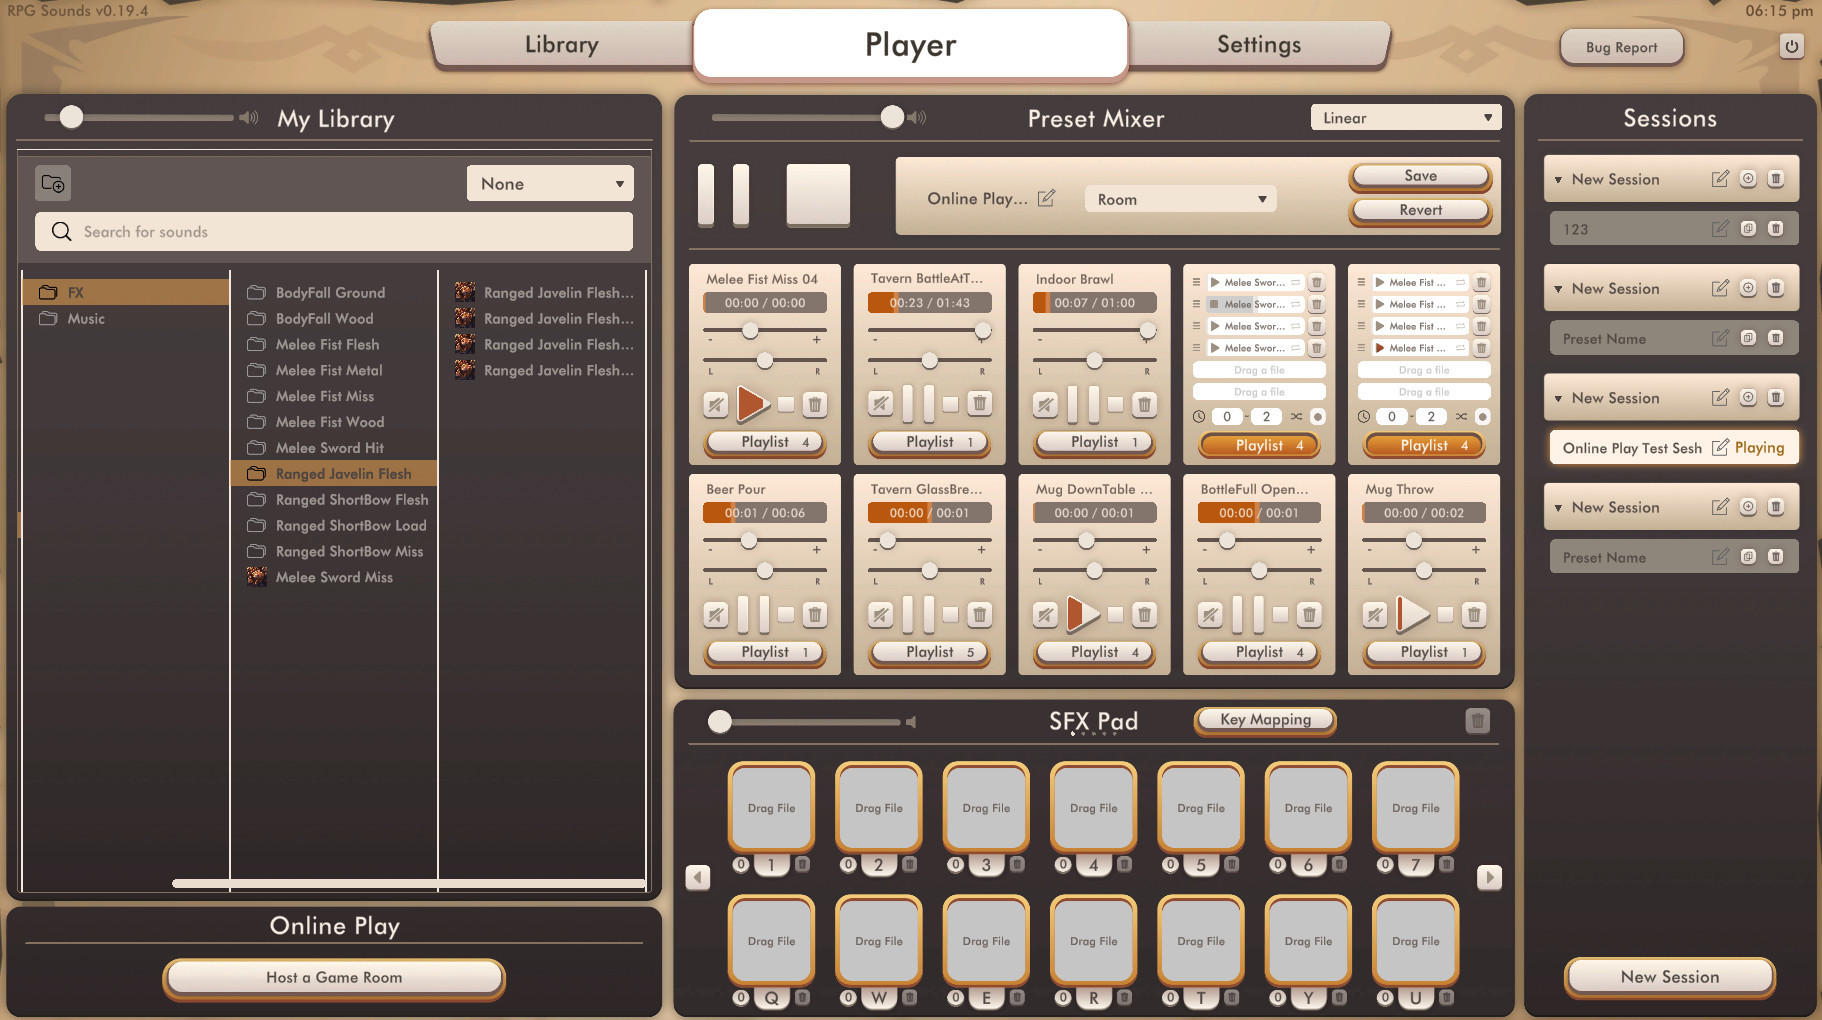 RPG Sounds - Combat Music Expansion - Sound Pack screenshot